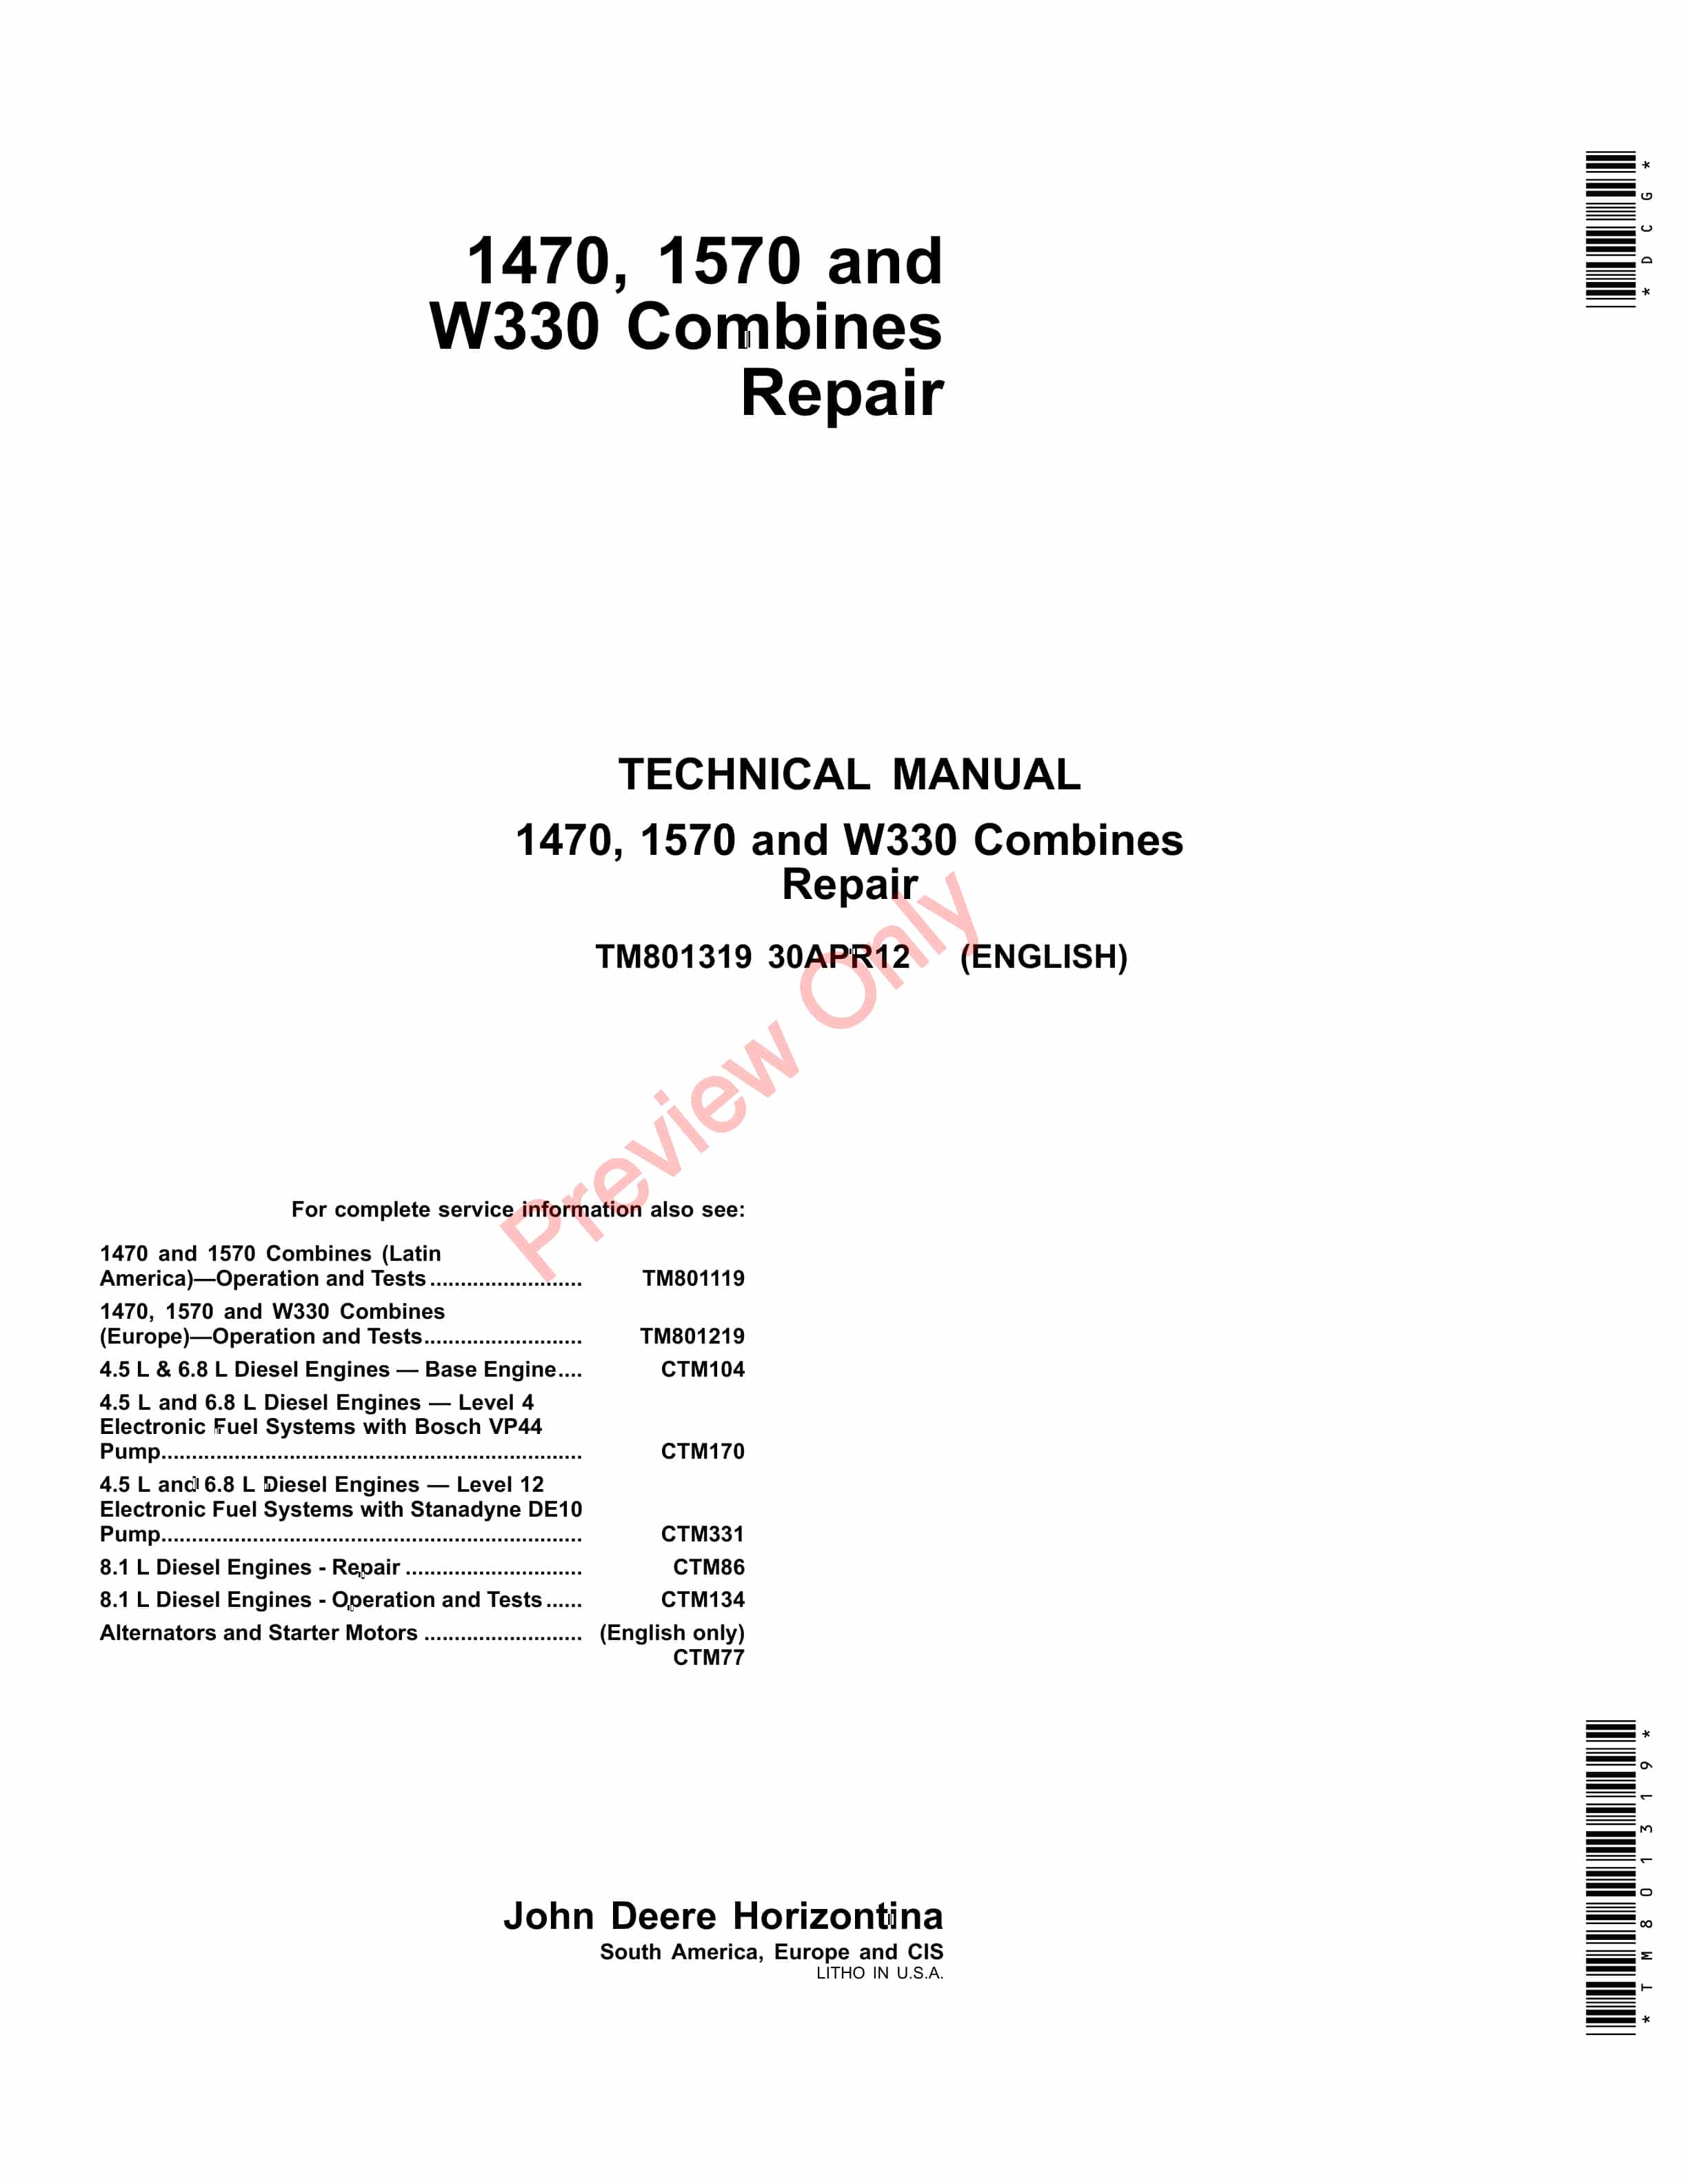 John Deere 1470 1570 and W330 Combine Technical Manual TM801319 19SEP12 1